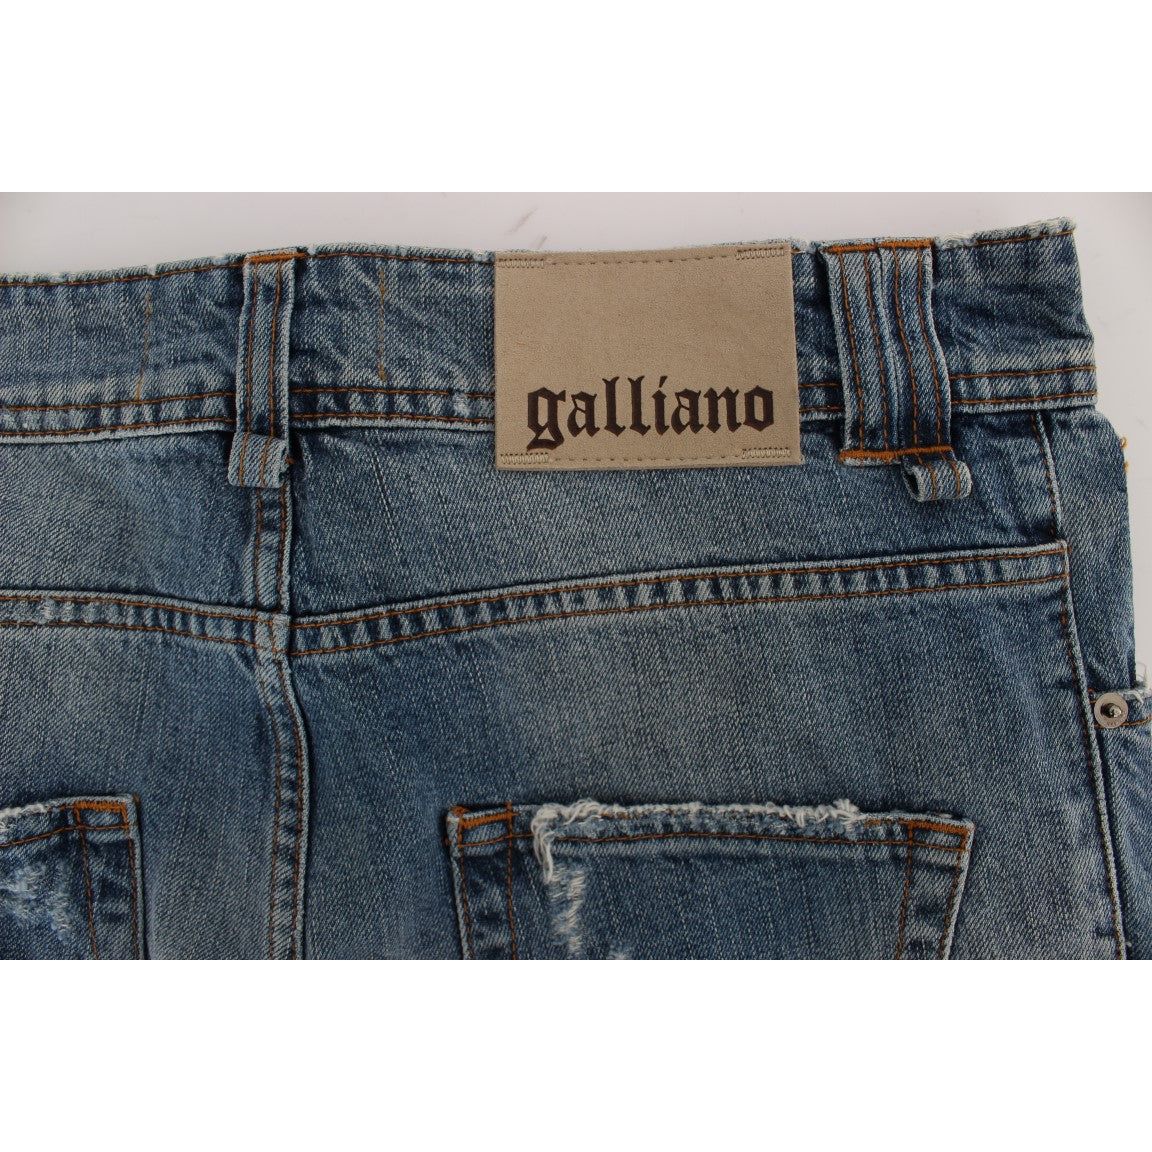 John Galliano Chic Boyfriend Blue Wash Jeans blue-wash-cotton-boyfriend-fit-cropped-jeans-1 330032-blue-wash-cotton-boyfriend-fit-cropped-jeans-2-7.jpg